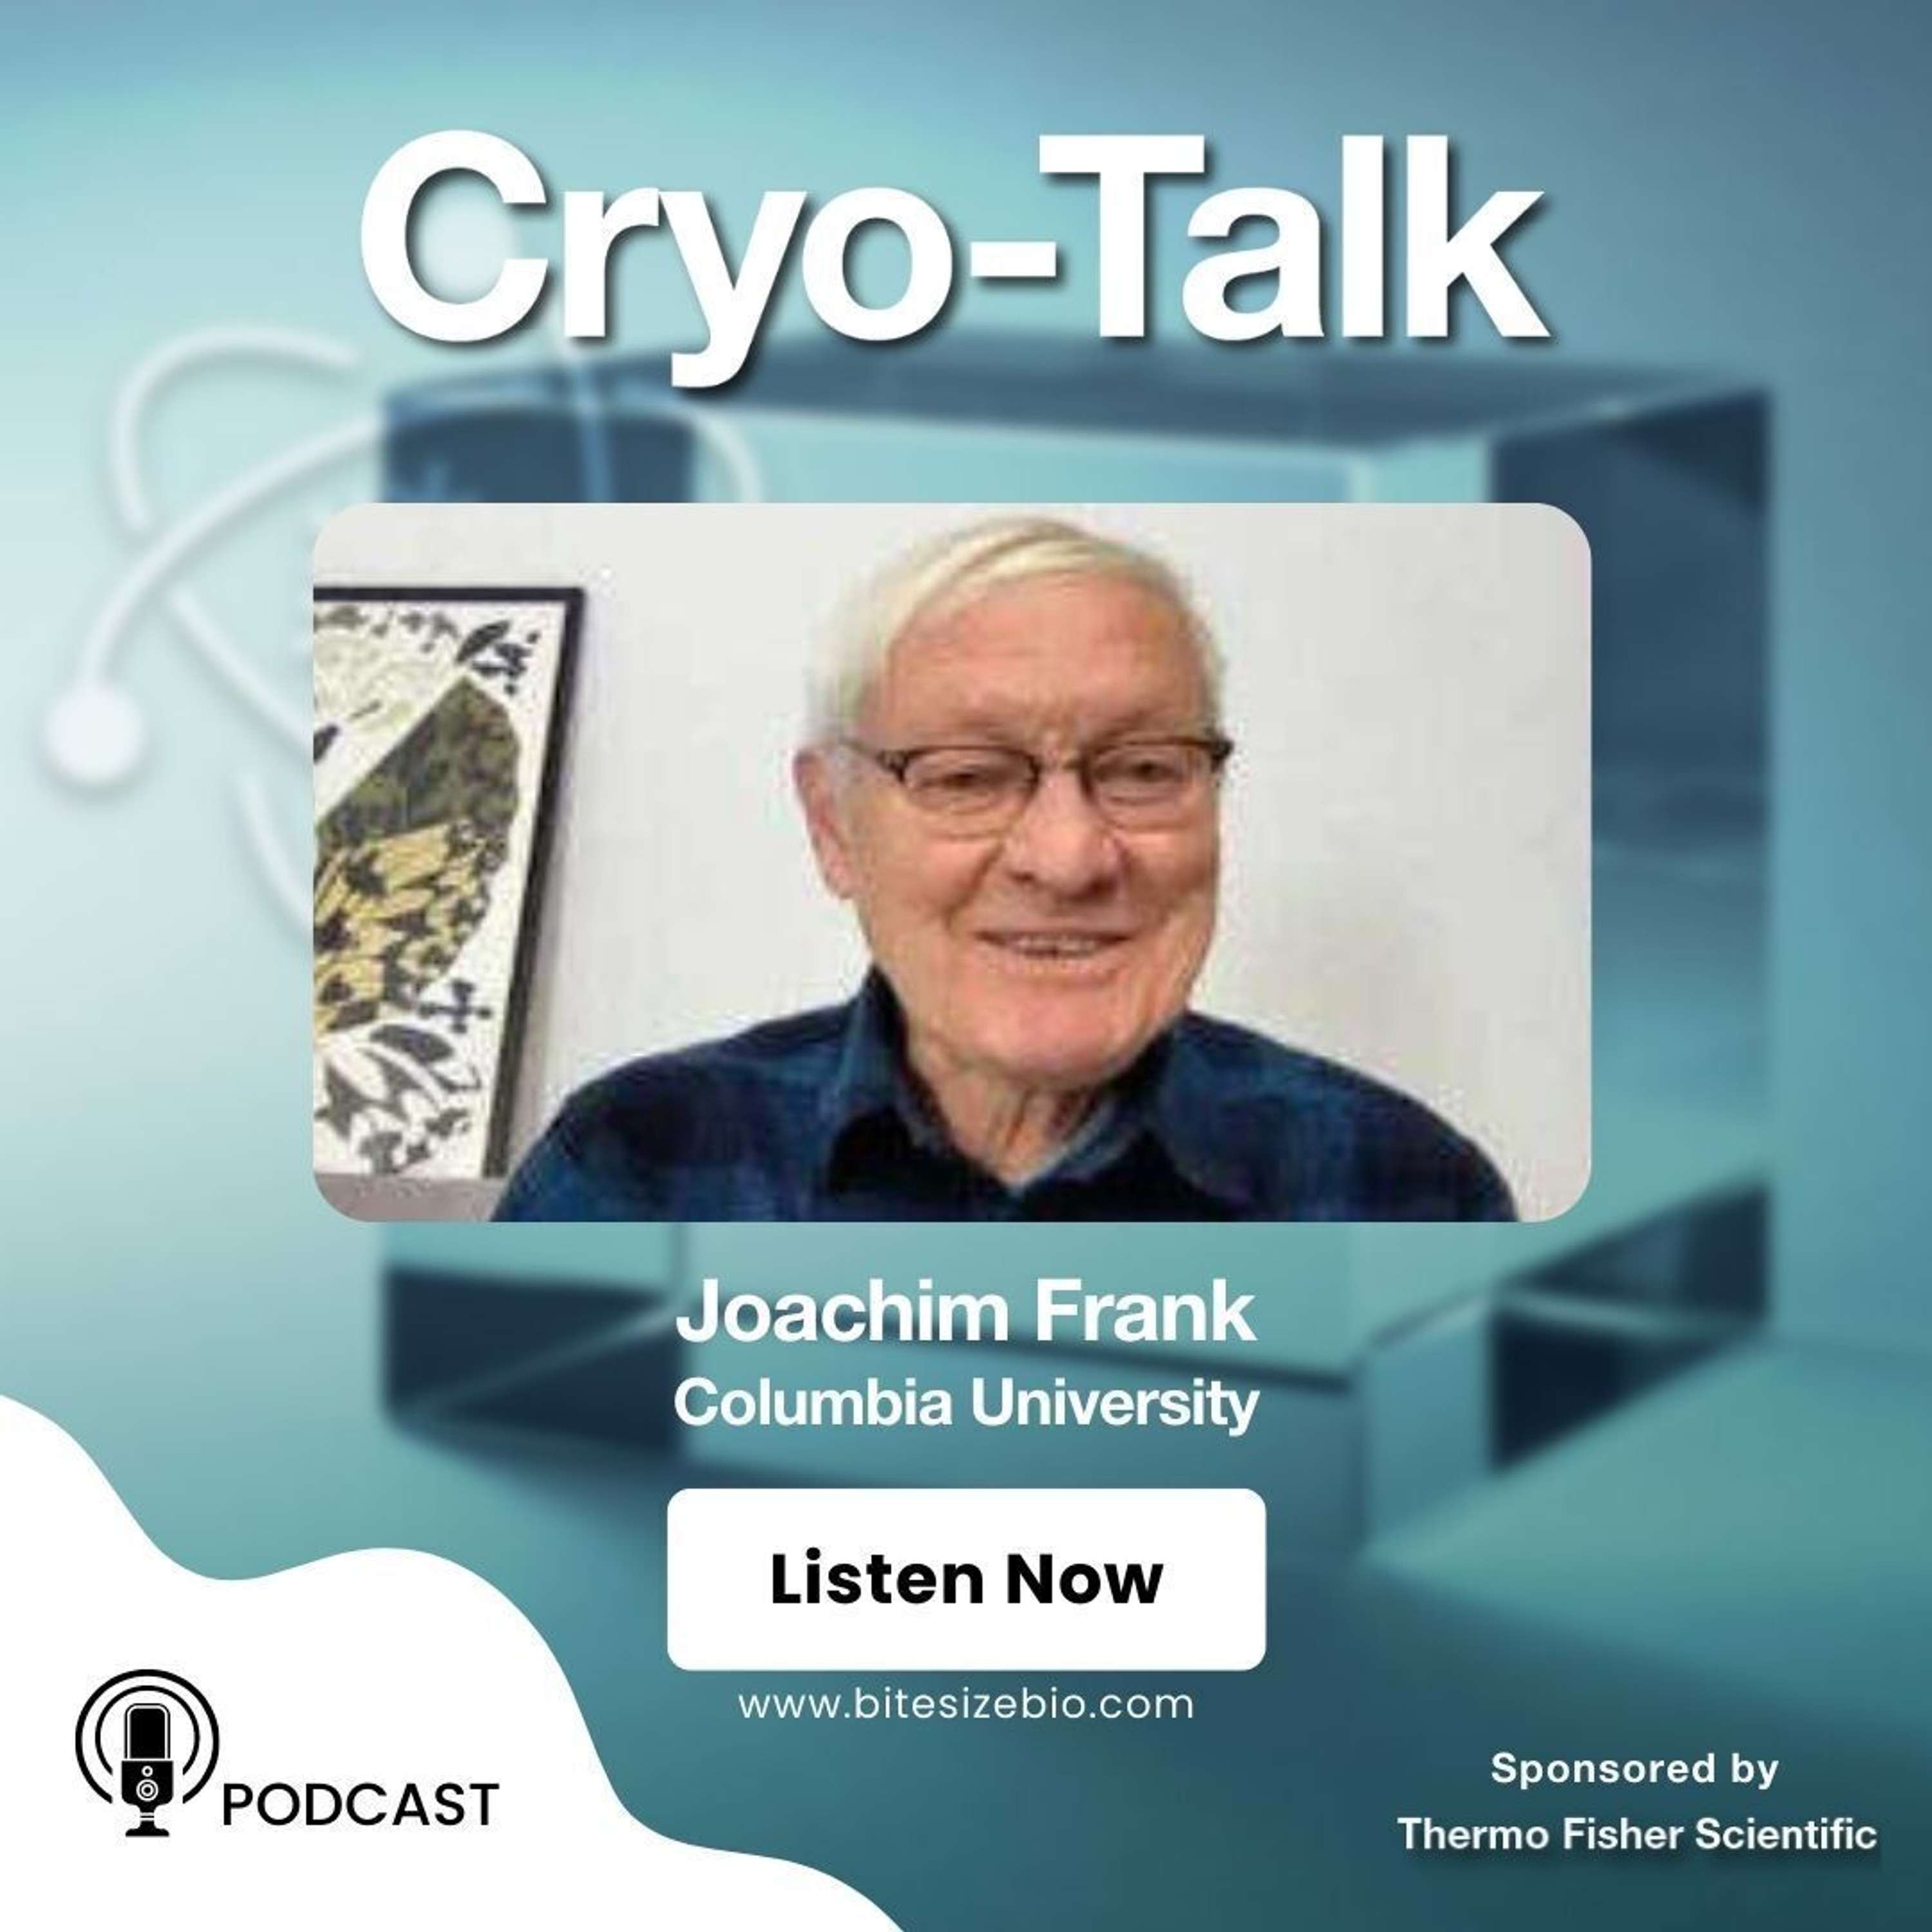 Cryo-Talk interviews Joachim Frank (Columbia University)